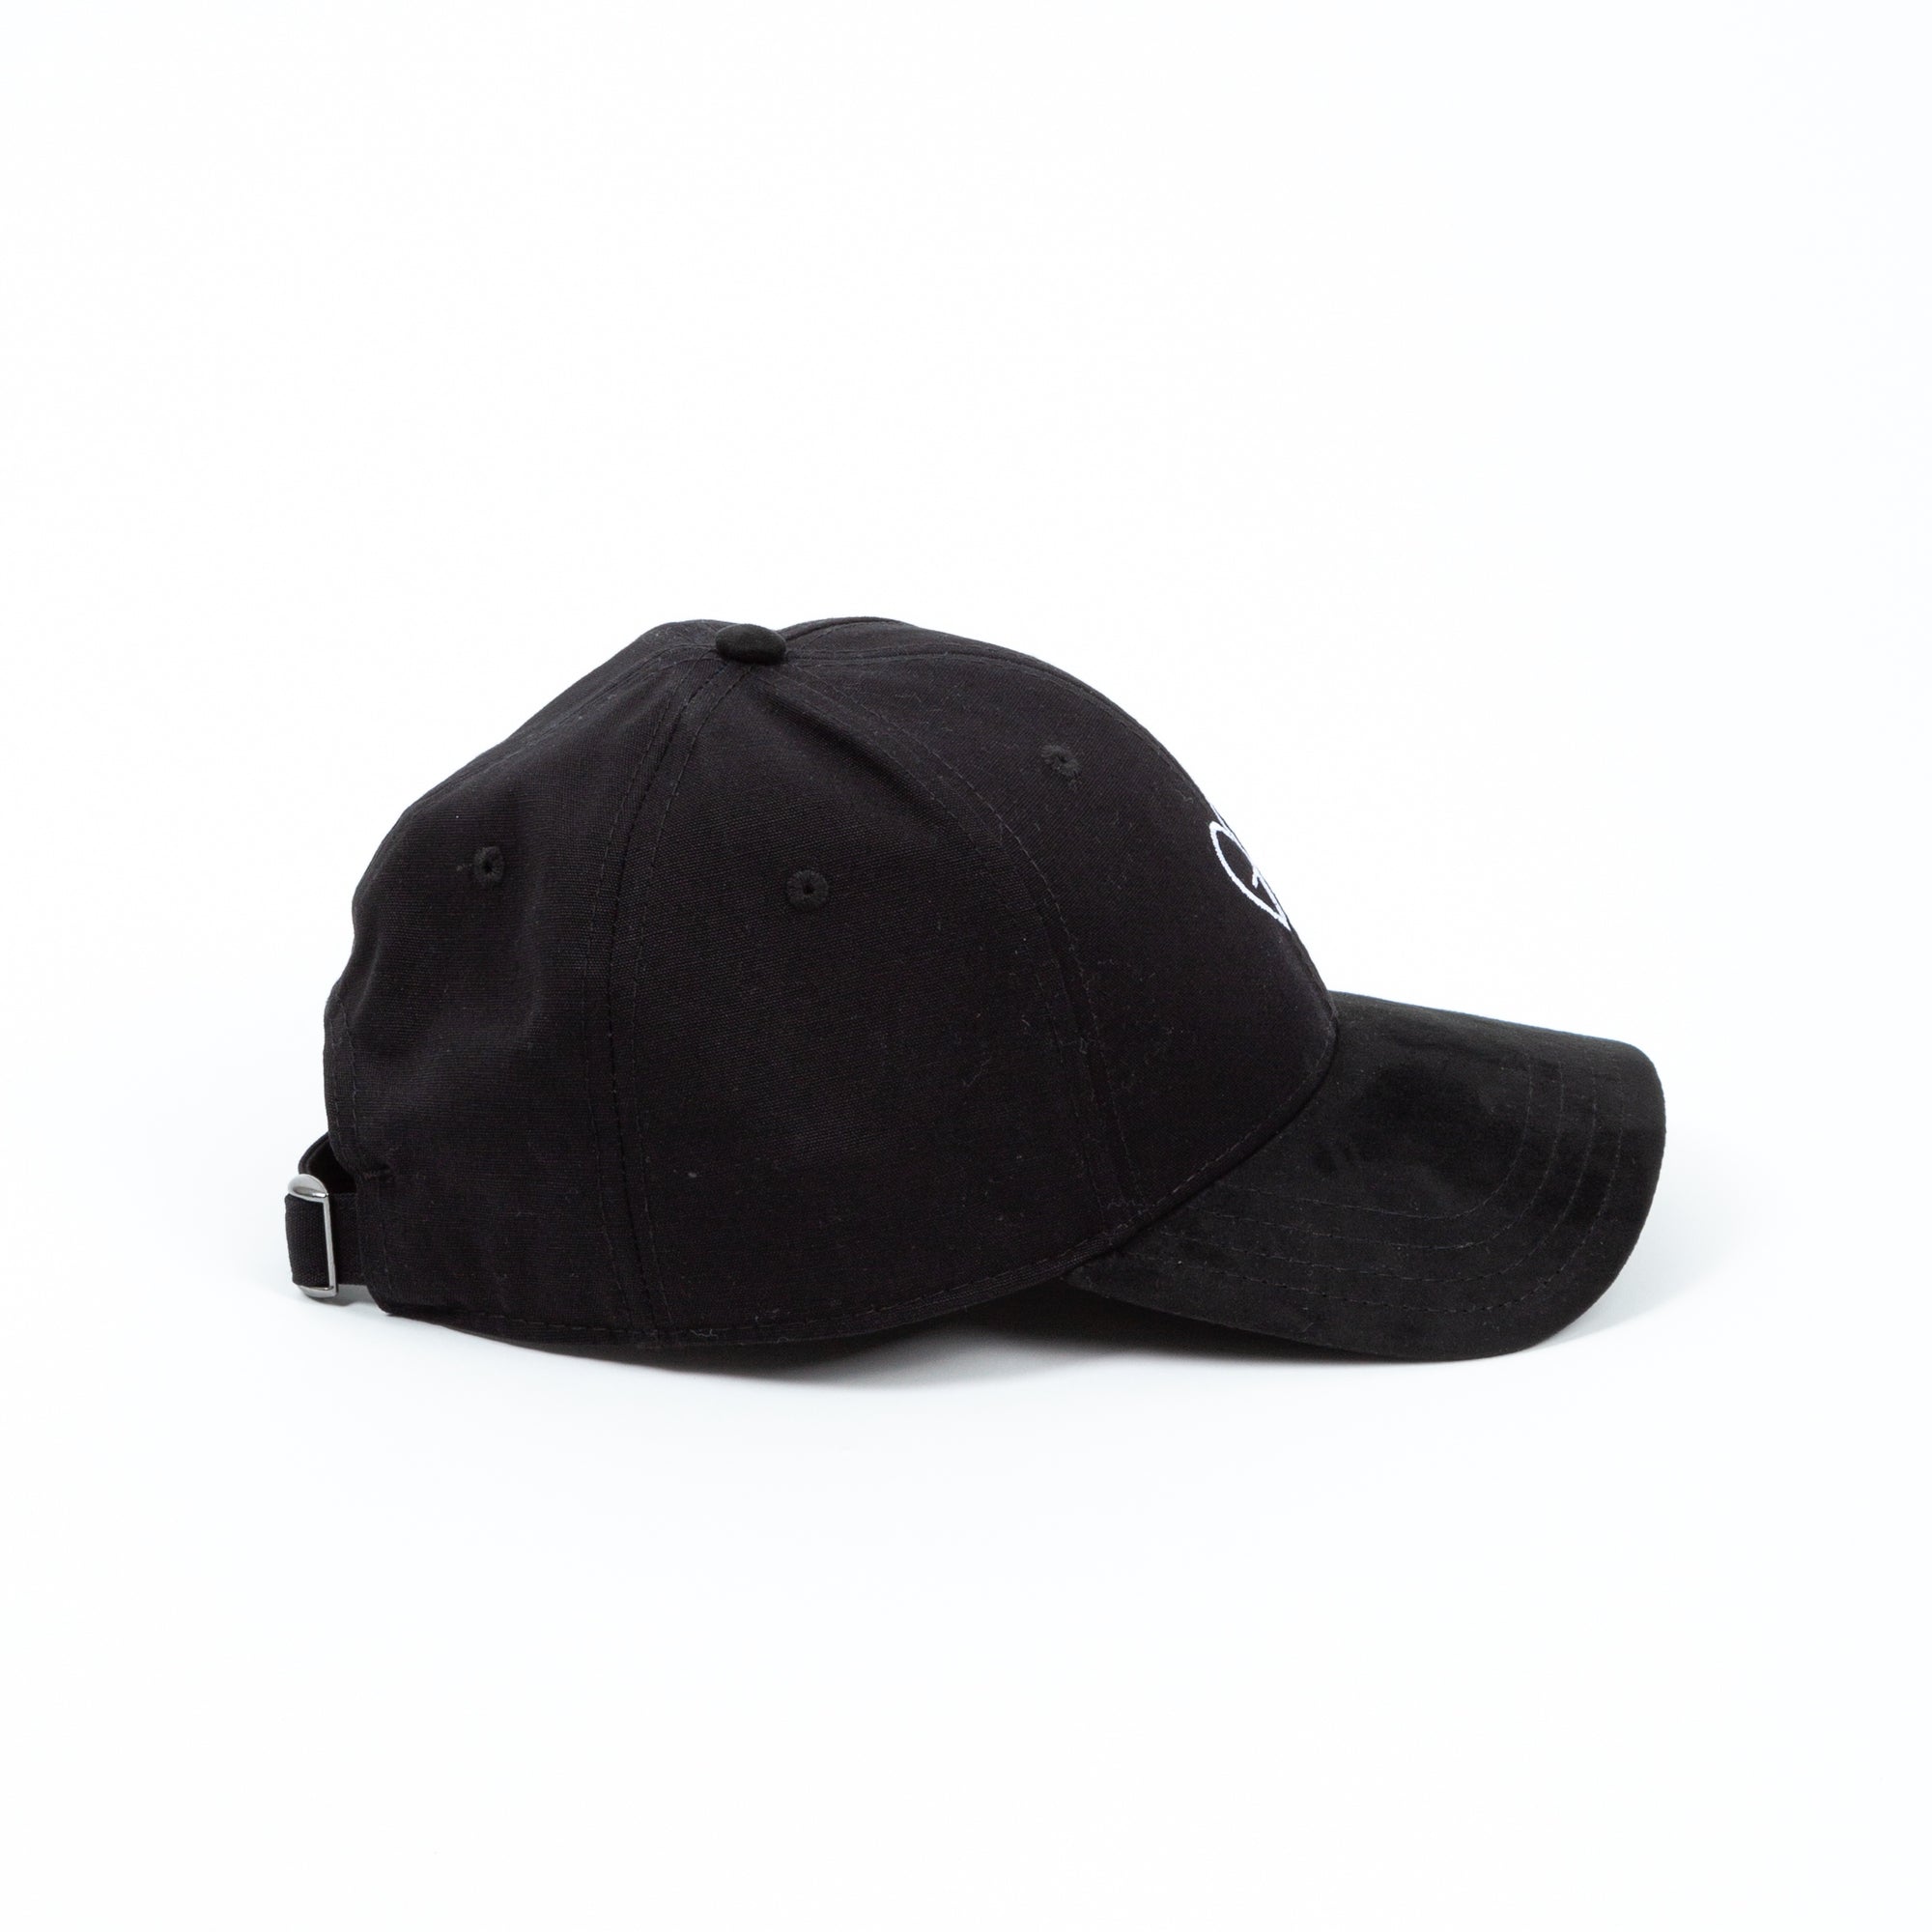 The Galey Alix Design Hat - Black